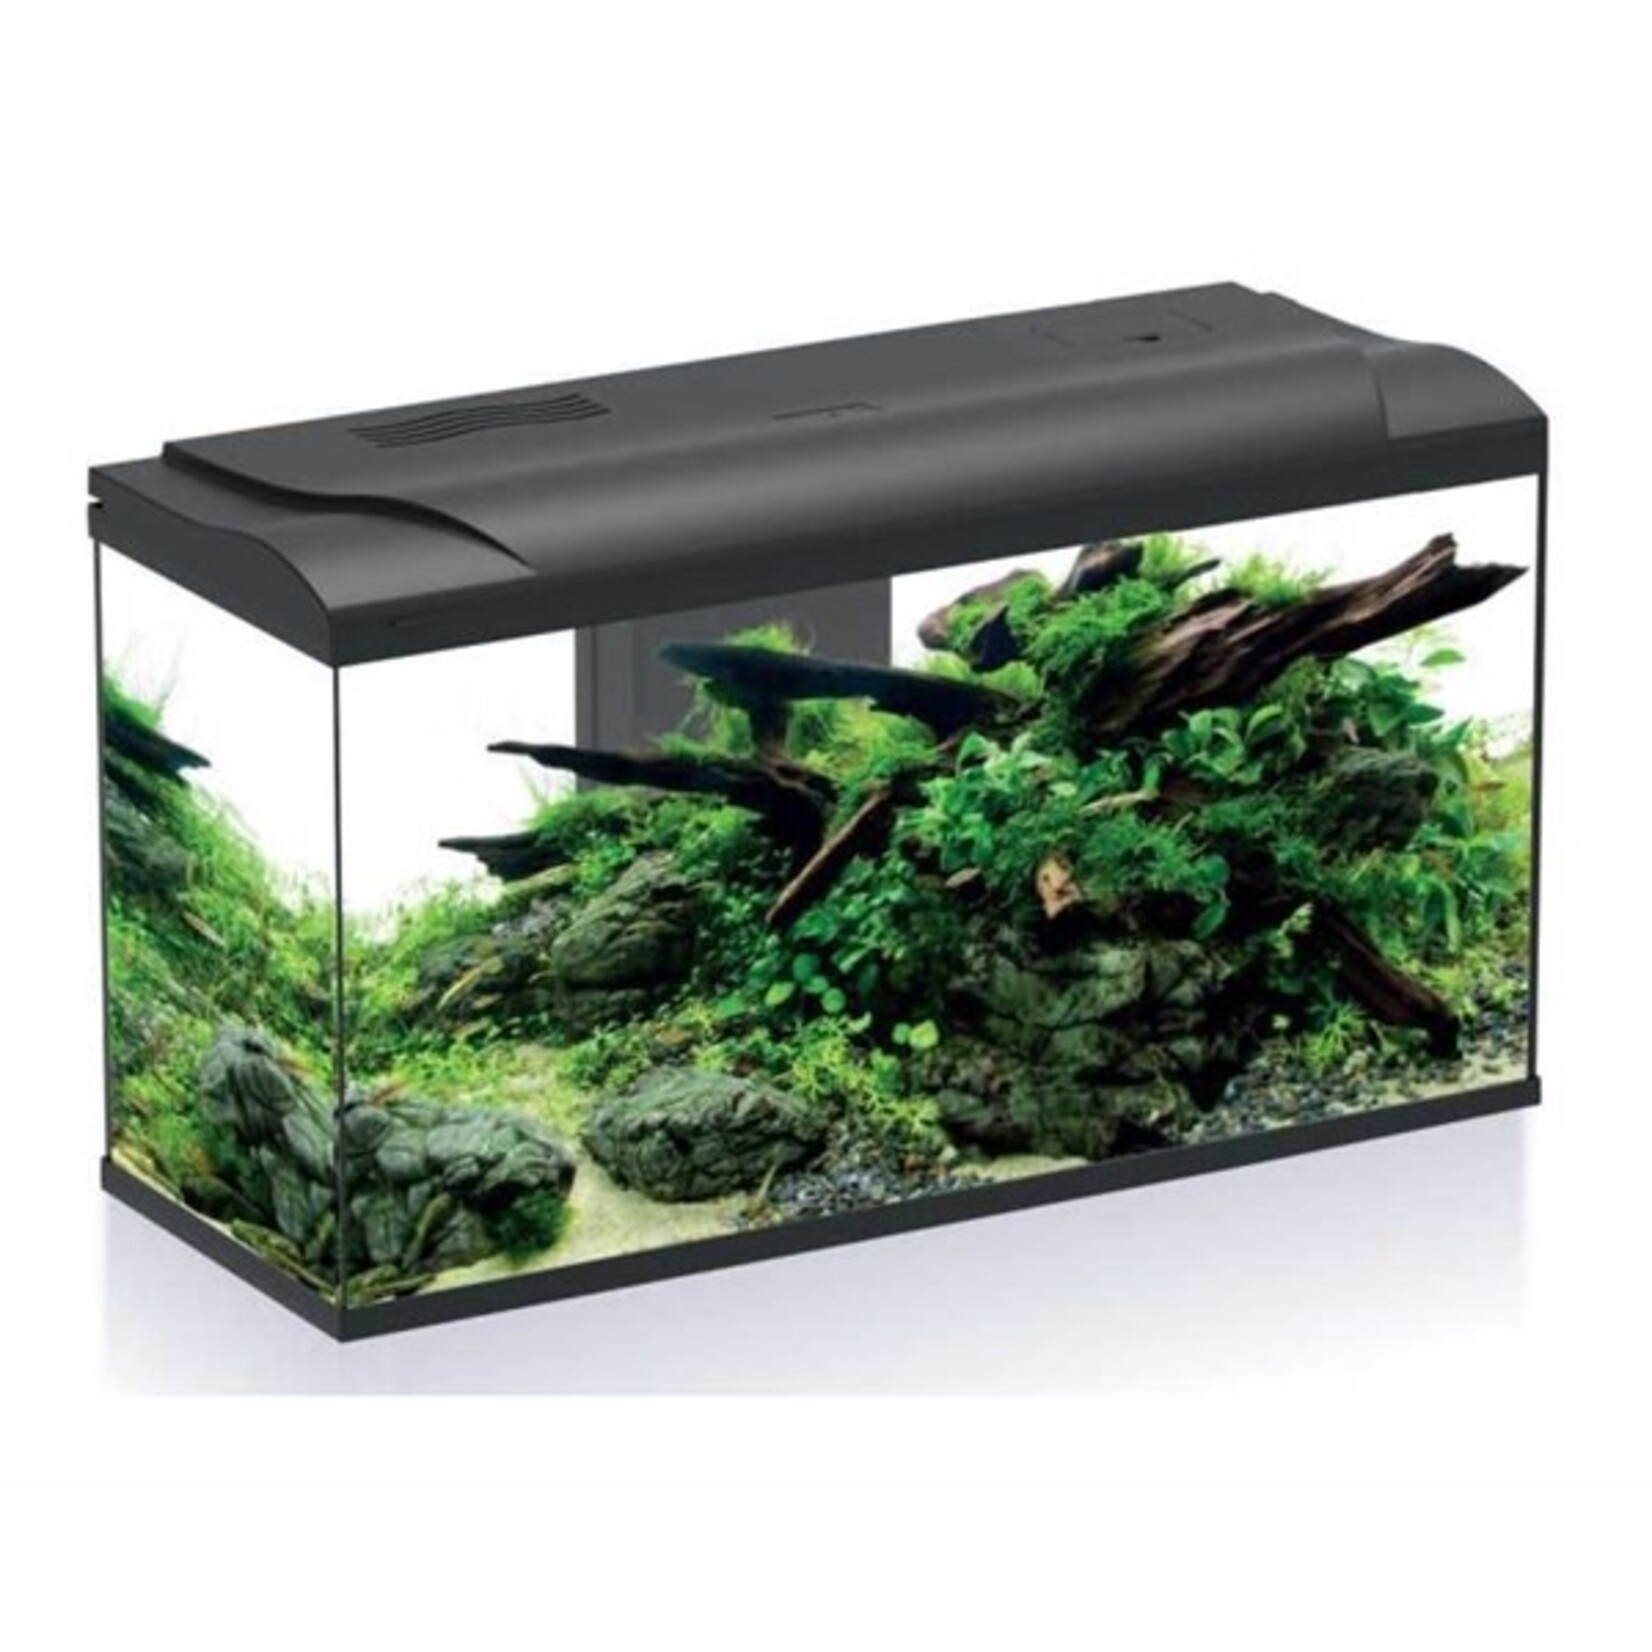 HS Aqua Aquarium platy bio 110 LED zwart 80x31x46 cm